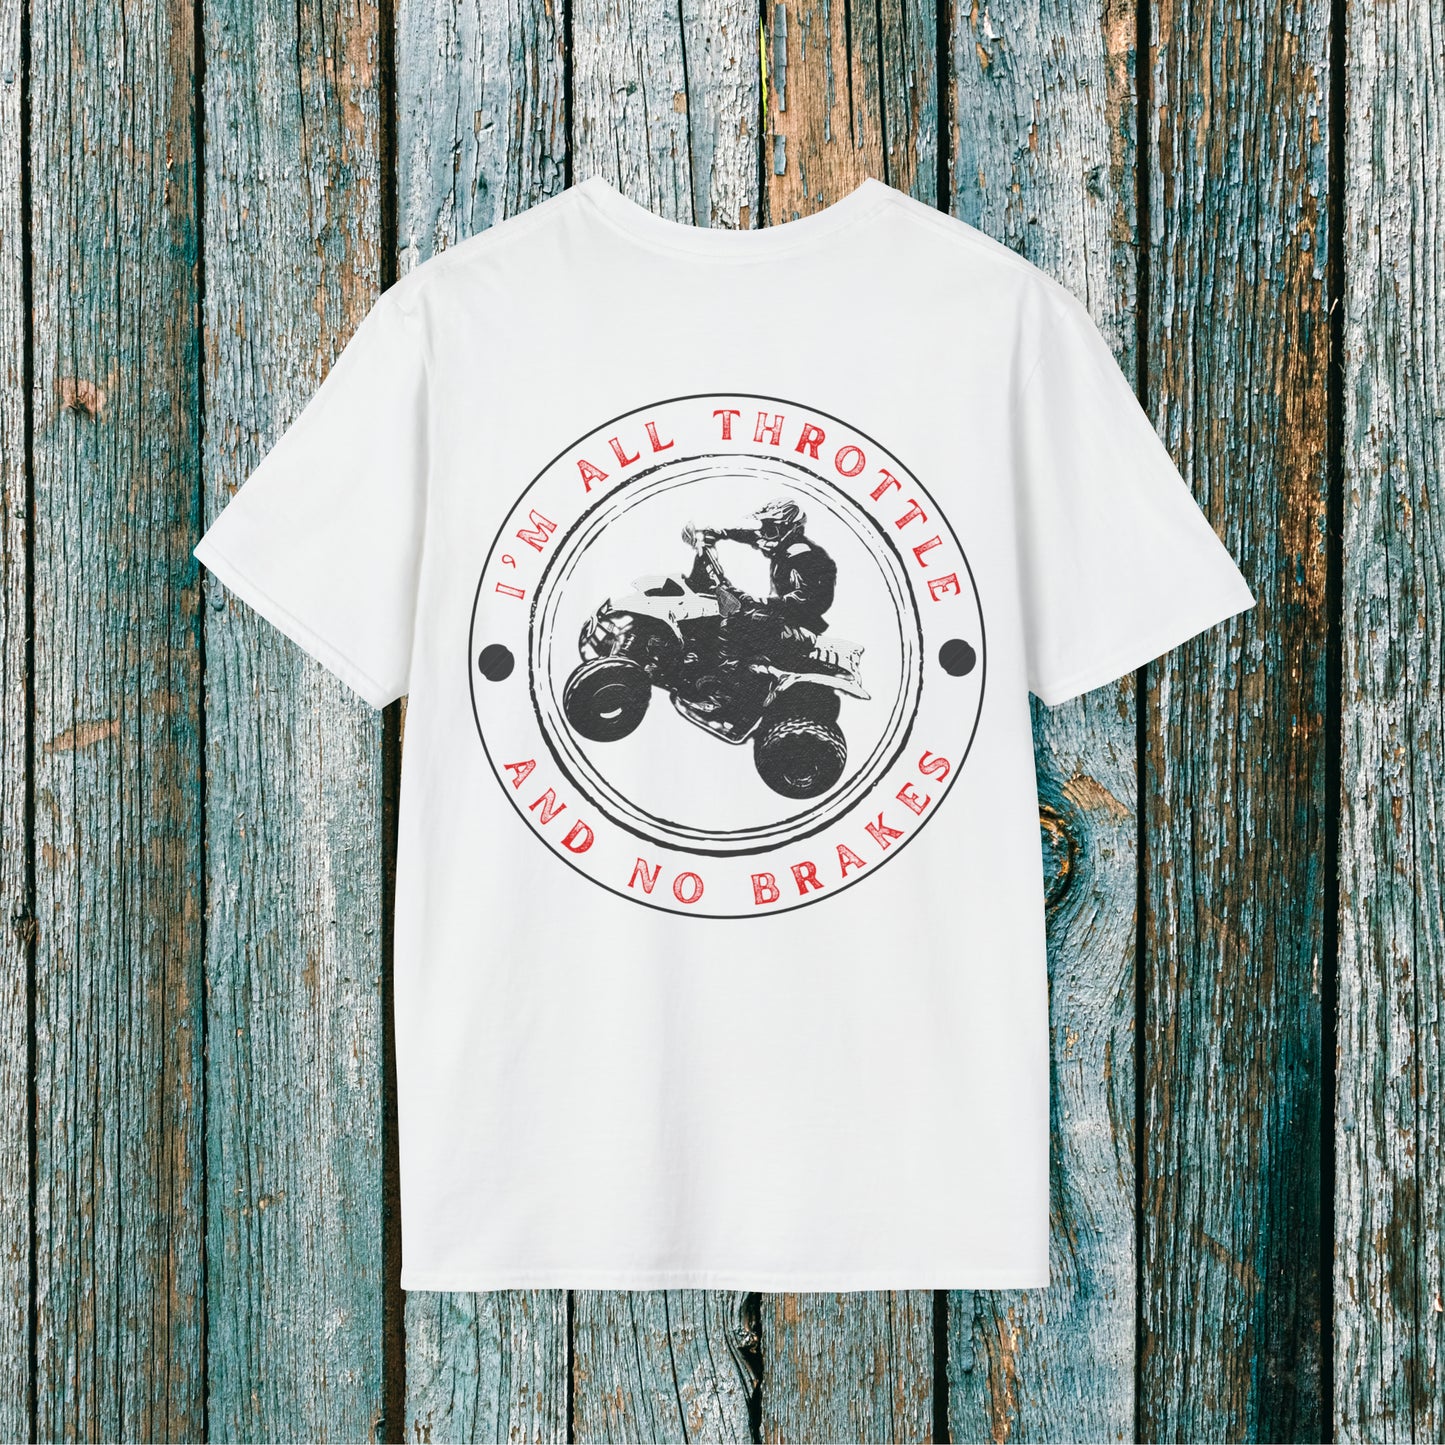 Mens ATV Shirt | All Throttle and No Brakes with Honda 400 EX ATV on back | Four wheeler shirt for men |  SOFT Cotton 2 SIDED Adult Unisex tee shirt | Four wheeler shirt for racers